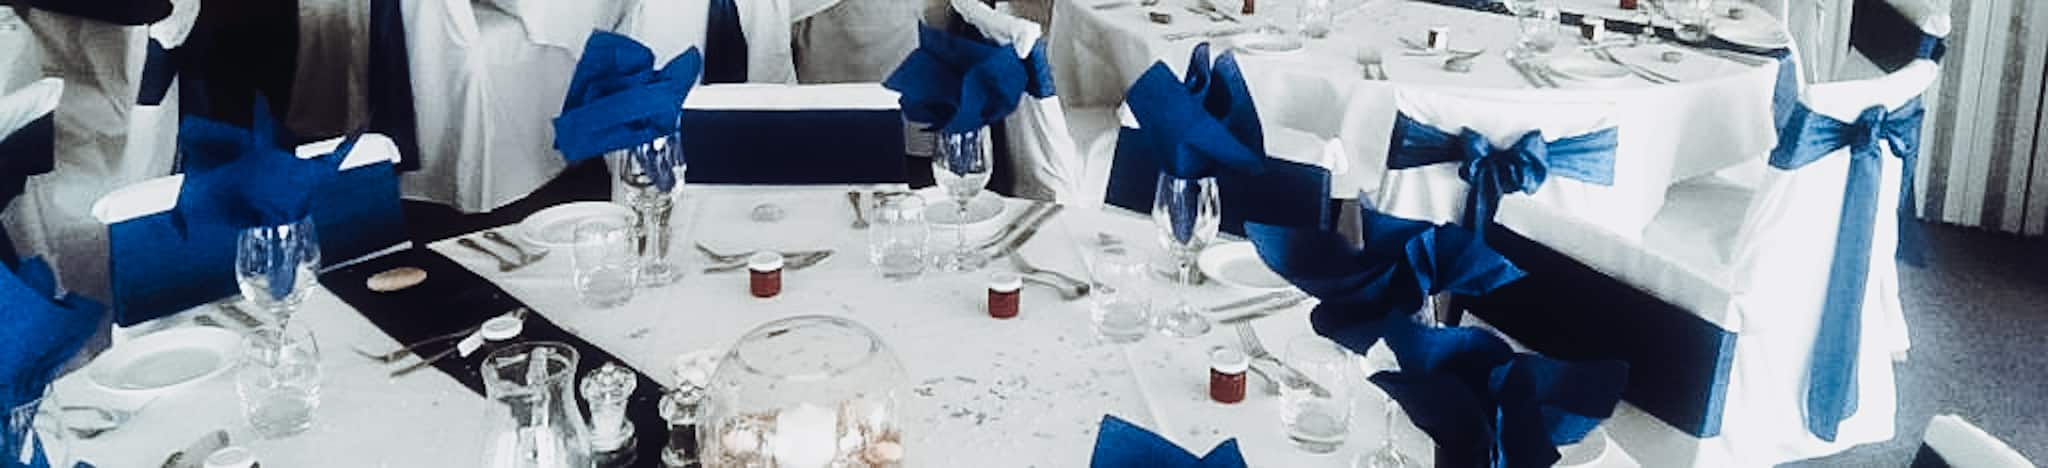 Wedding-Tables-2-wedding-slider-1024×234